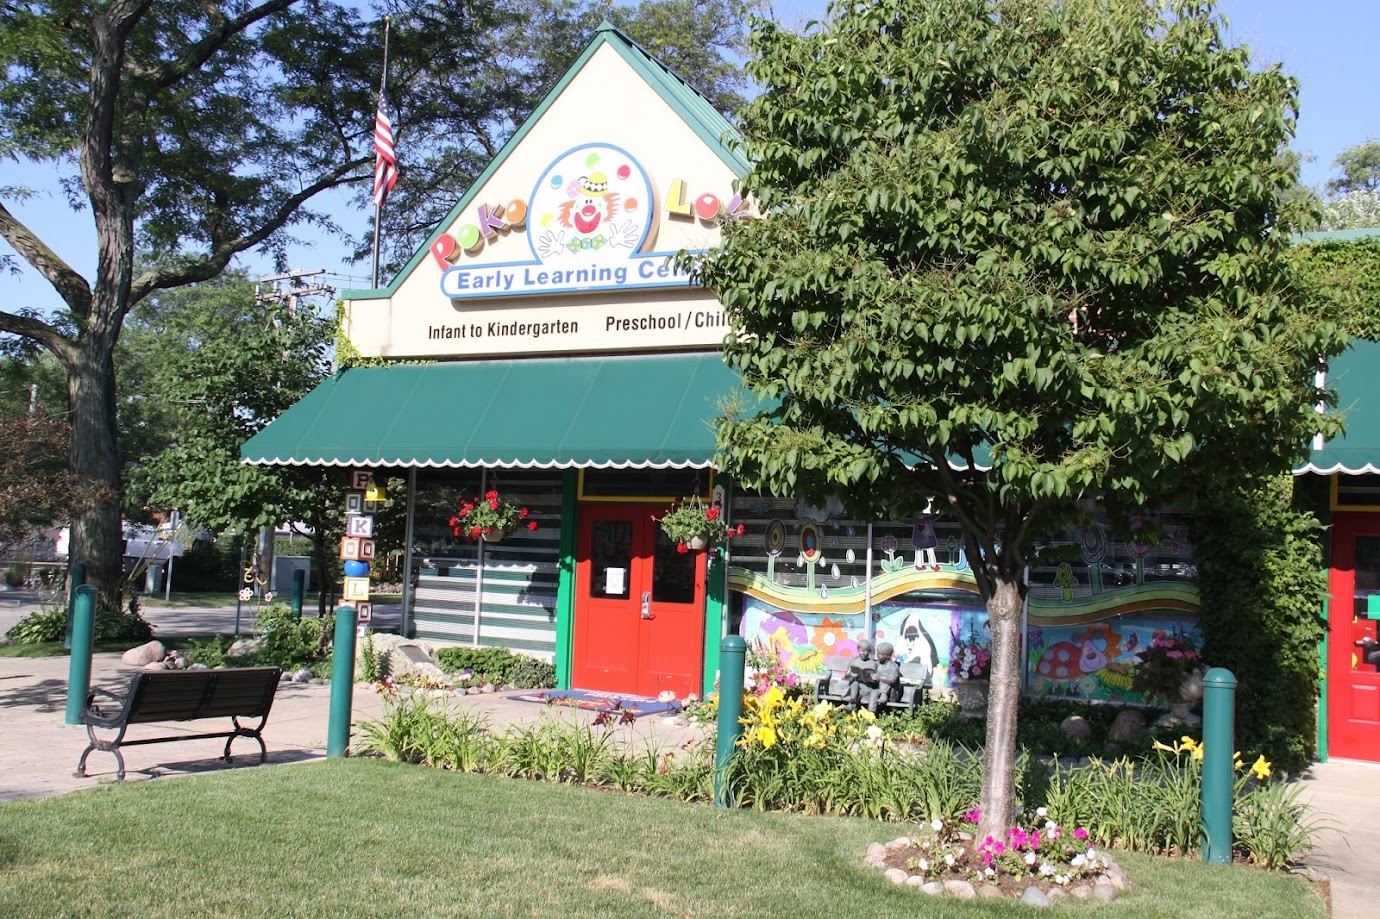 Poko Loko Early Learning Center, Glenview